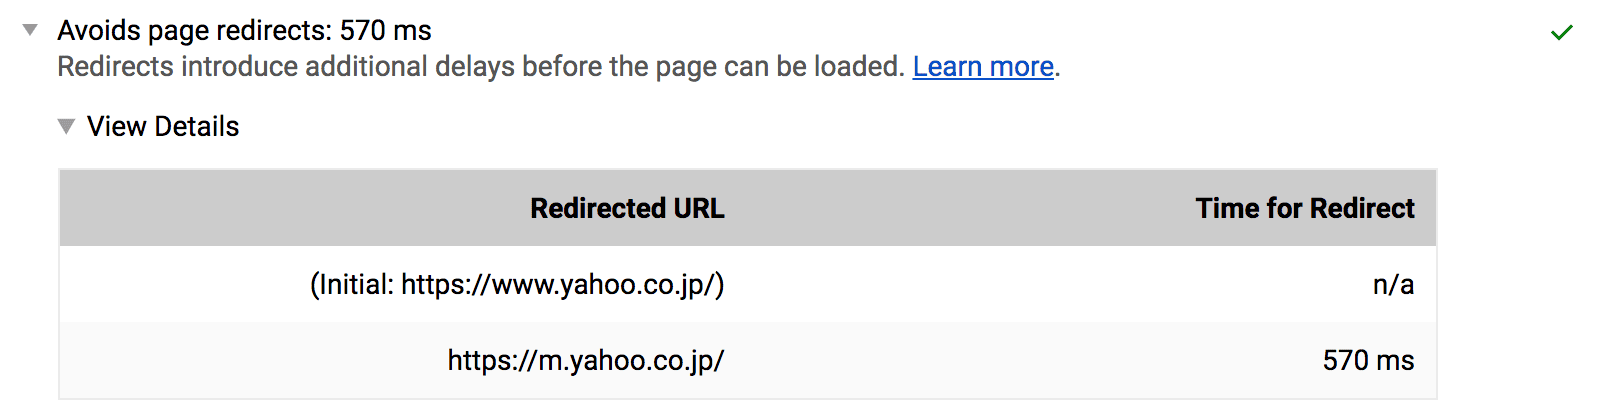 ممیزی "Avoids page redirects".